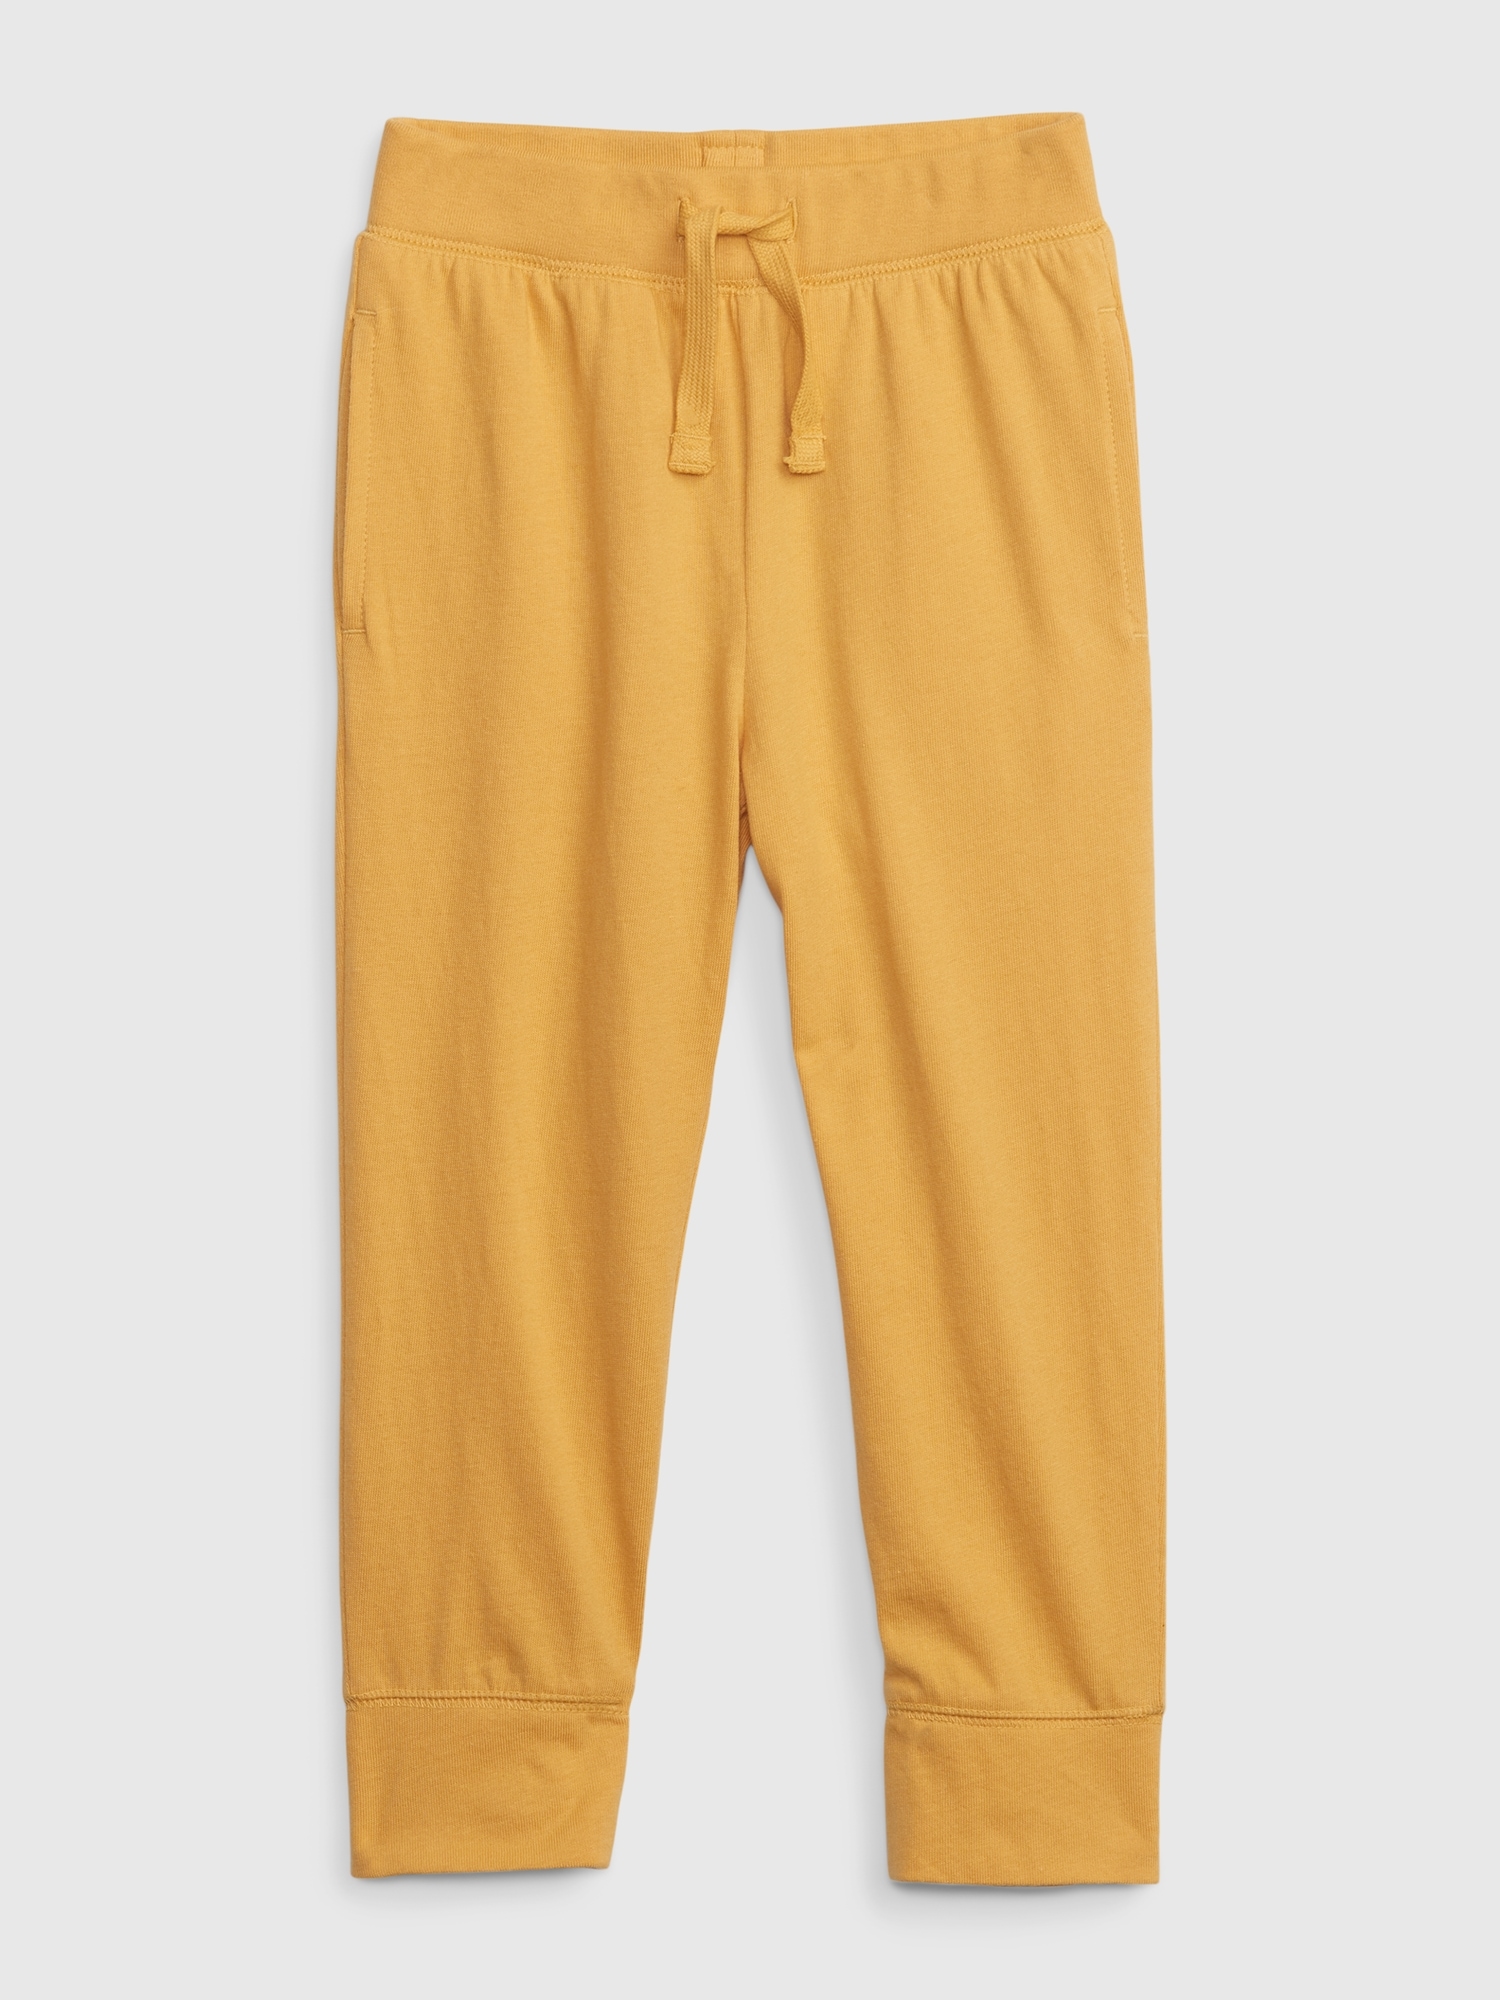 Gap Toddler 100% Organic Cotton Mix and Match Pull-On Pants yellow. 1